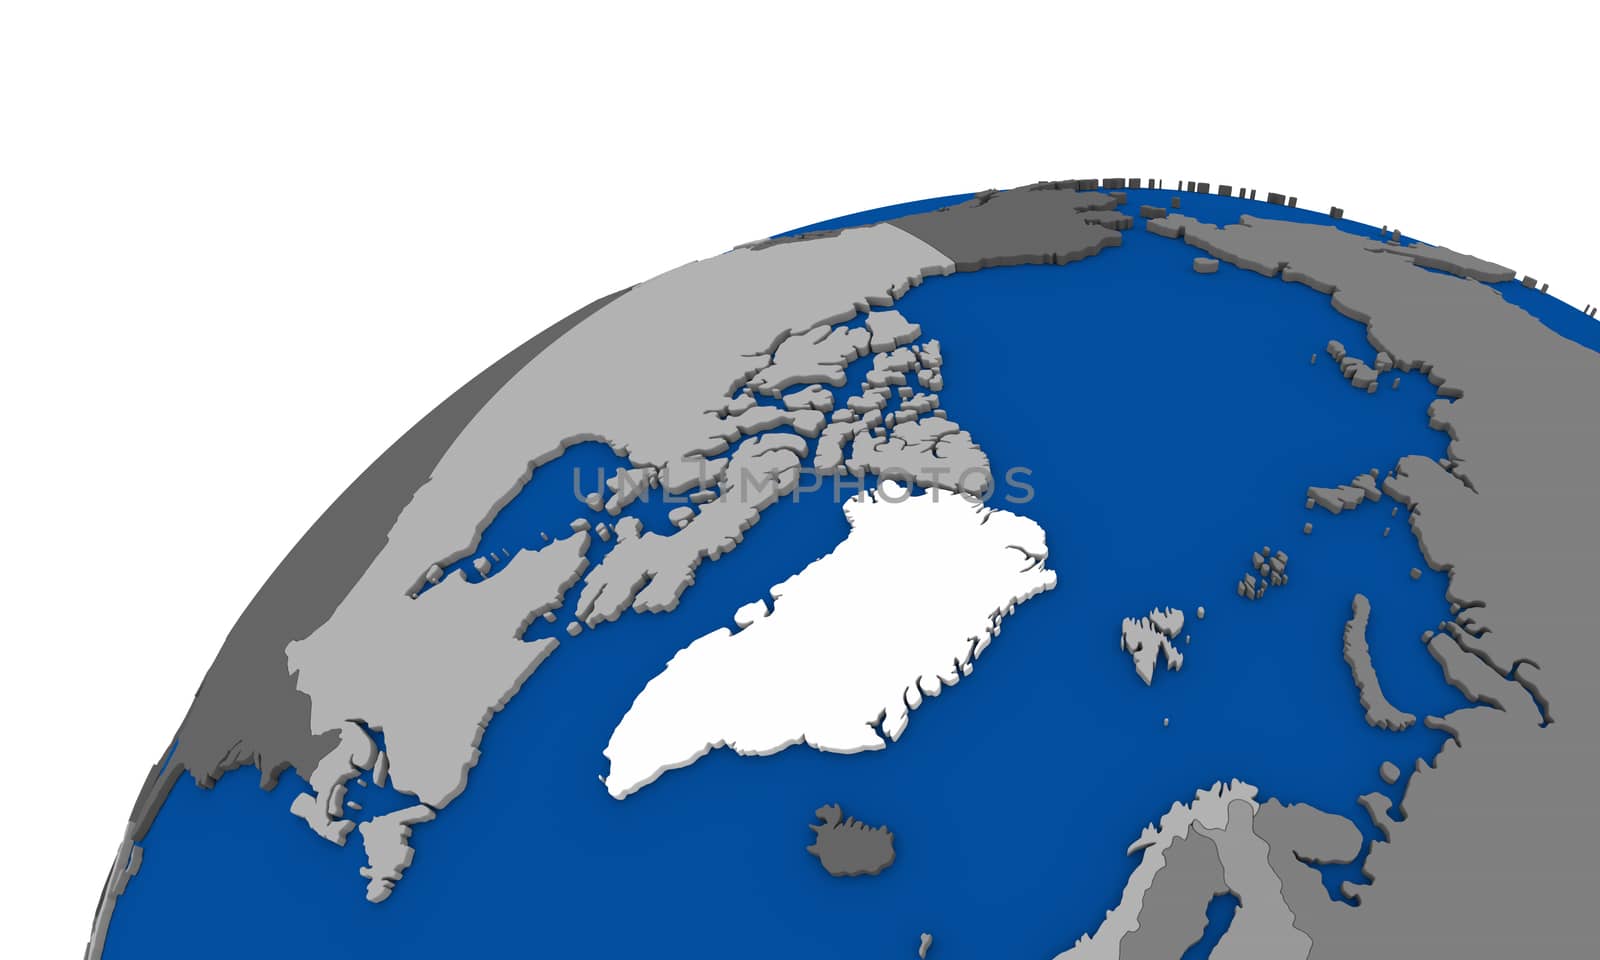 Arctic north polar region on globe